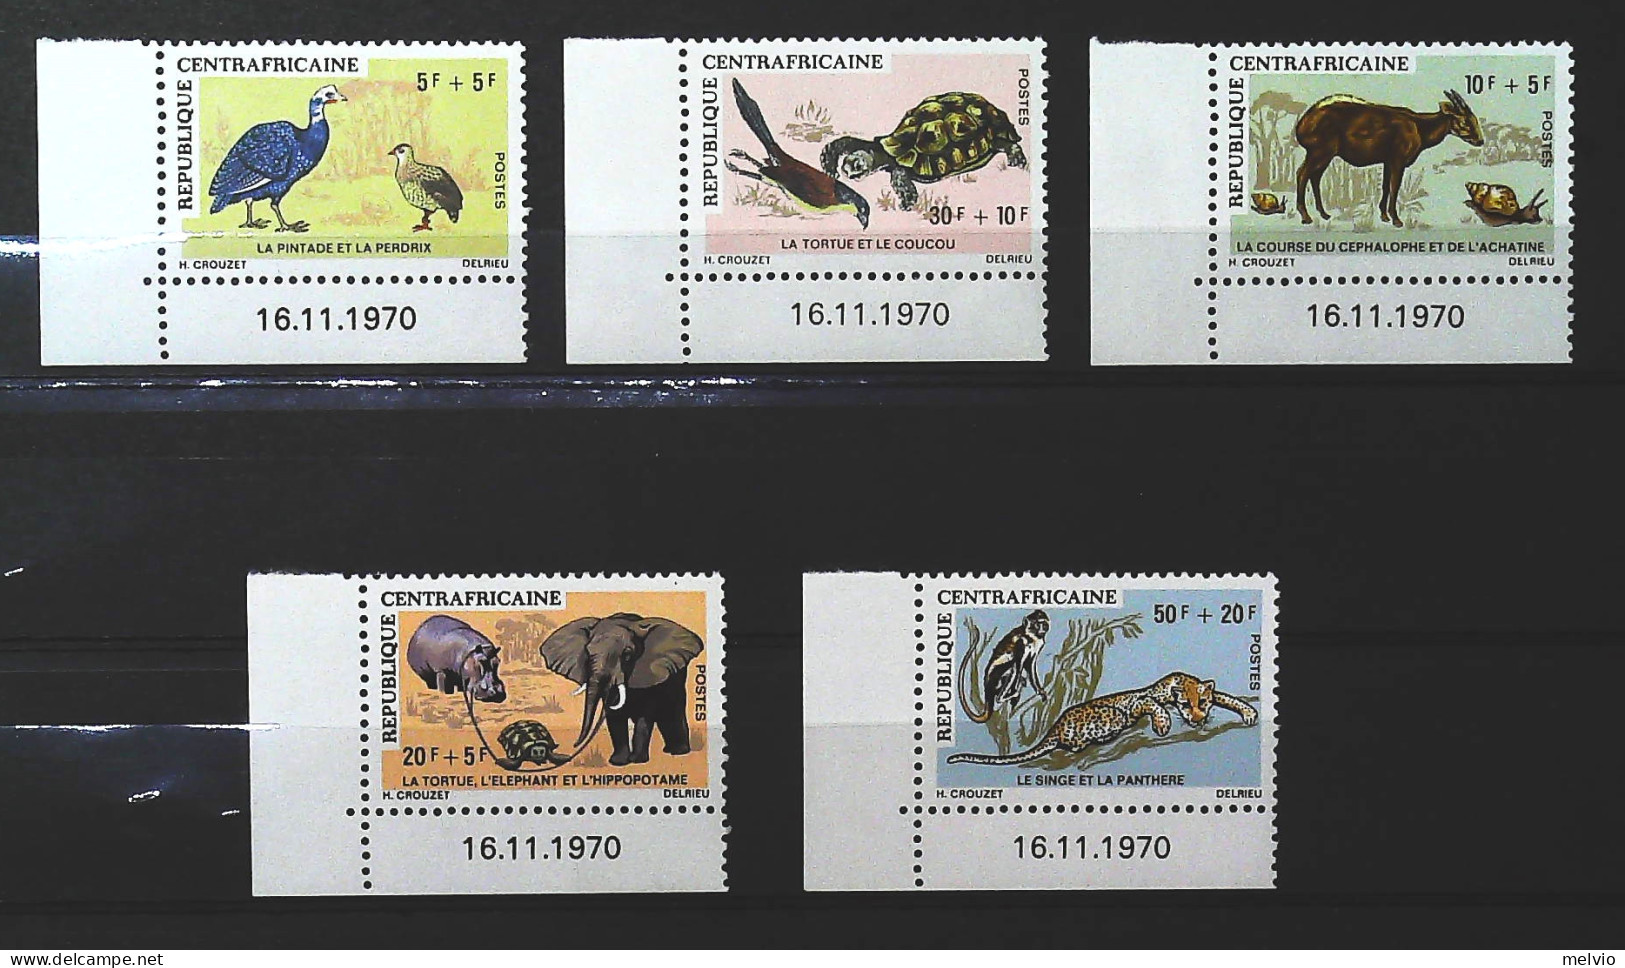 1971-Centroafricana Rep.(MNH=**) Serie 5 Valori Scimmia Uccelli Antilopi Elefant - Central African Republic